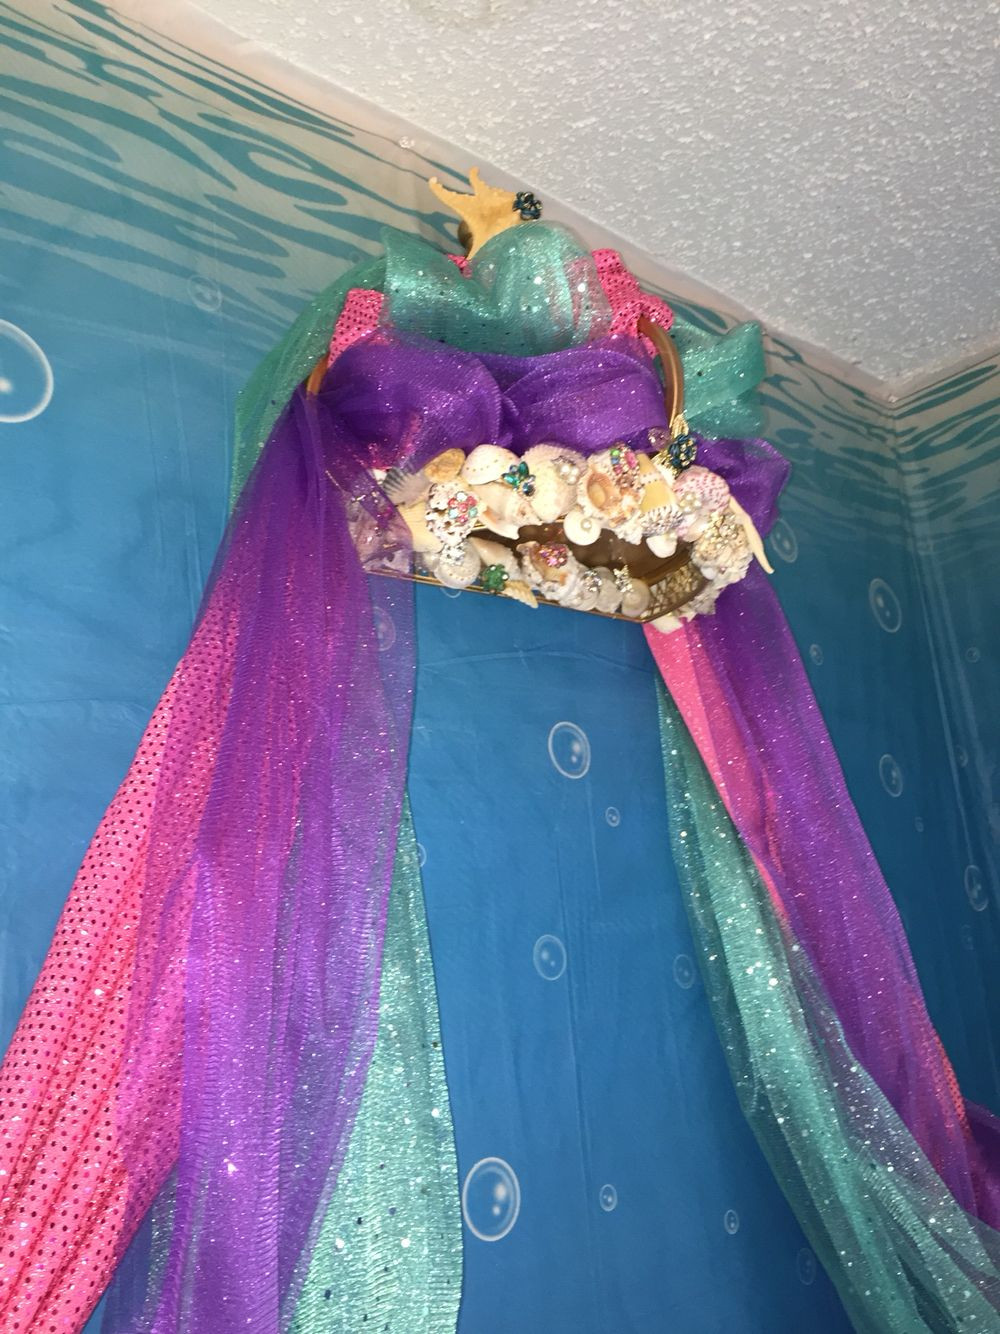 Mermaid Decor For Kids Room
 Mermaid bed canopy in 2019